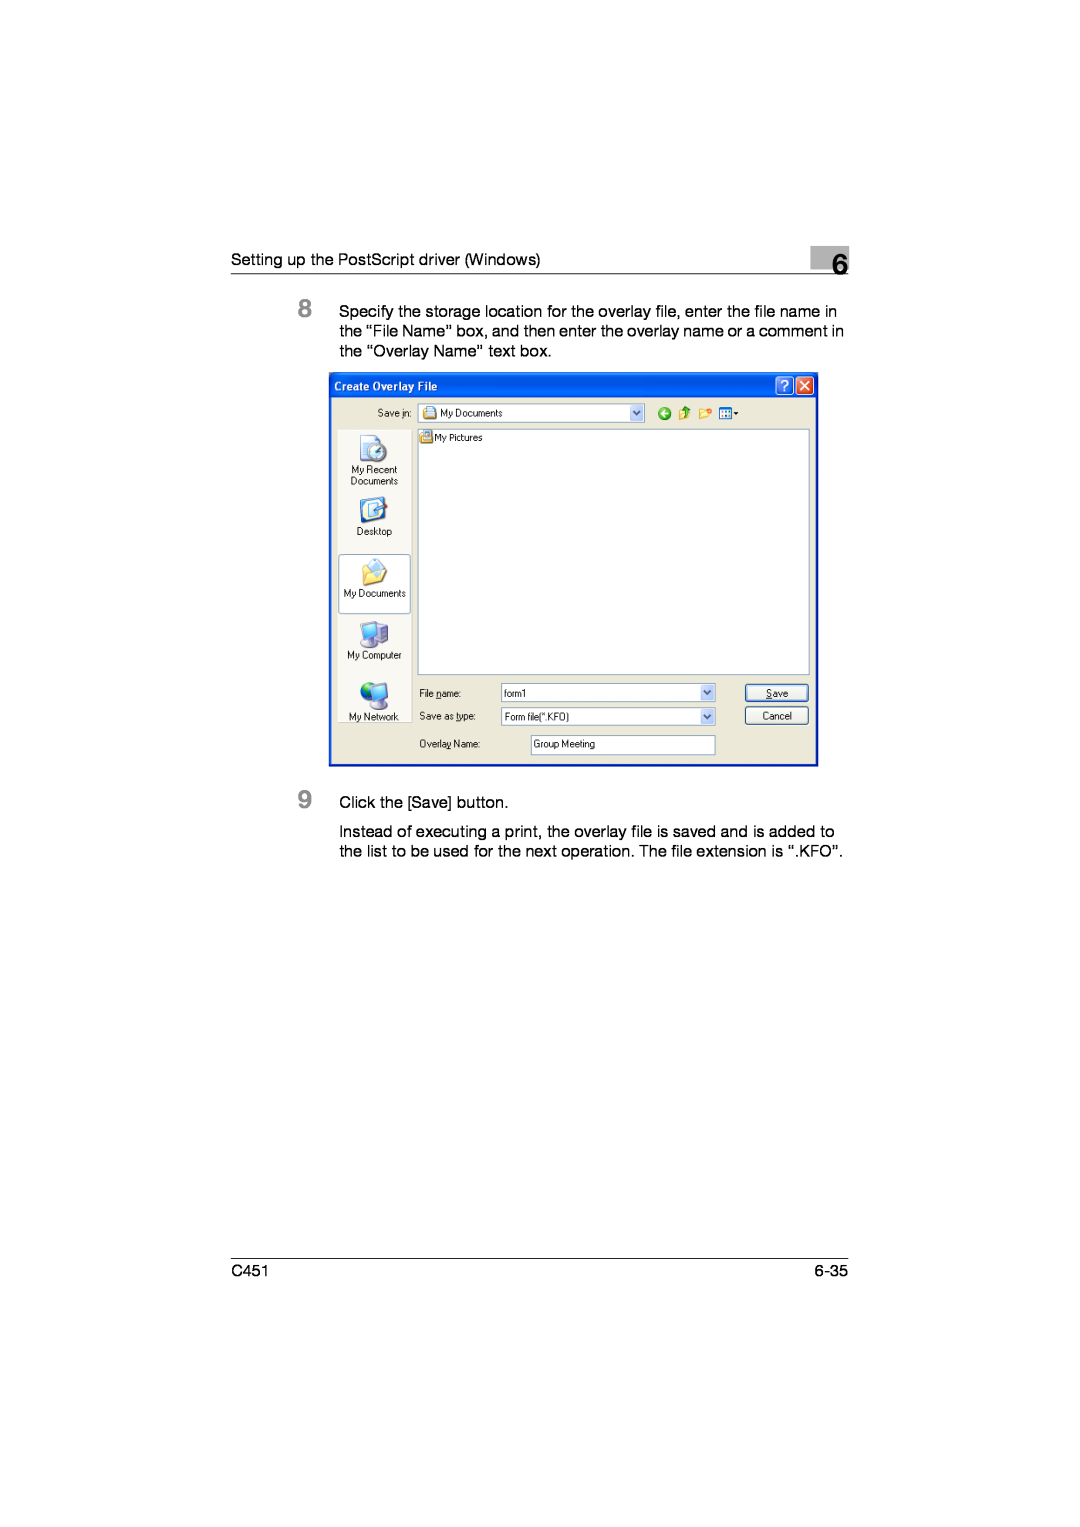 Konica Minolta C451 manual Setting up the PostScript driver Windows, Click the Save button, 6-35 